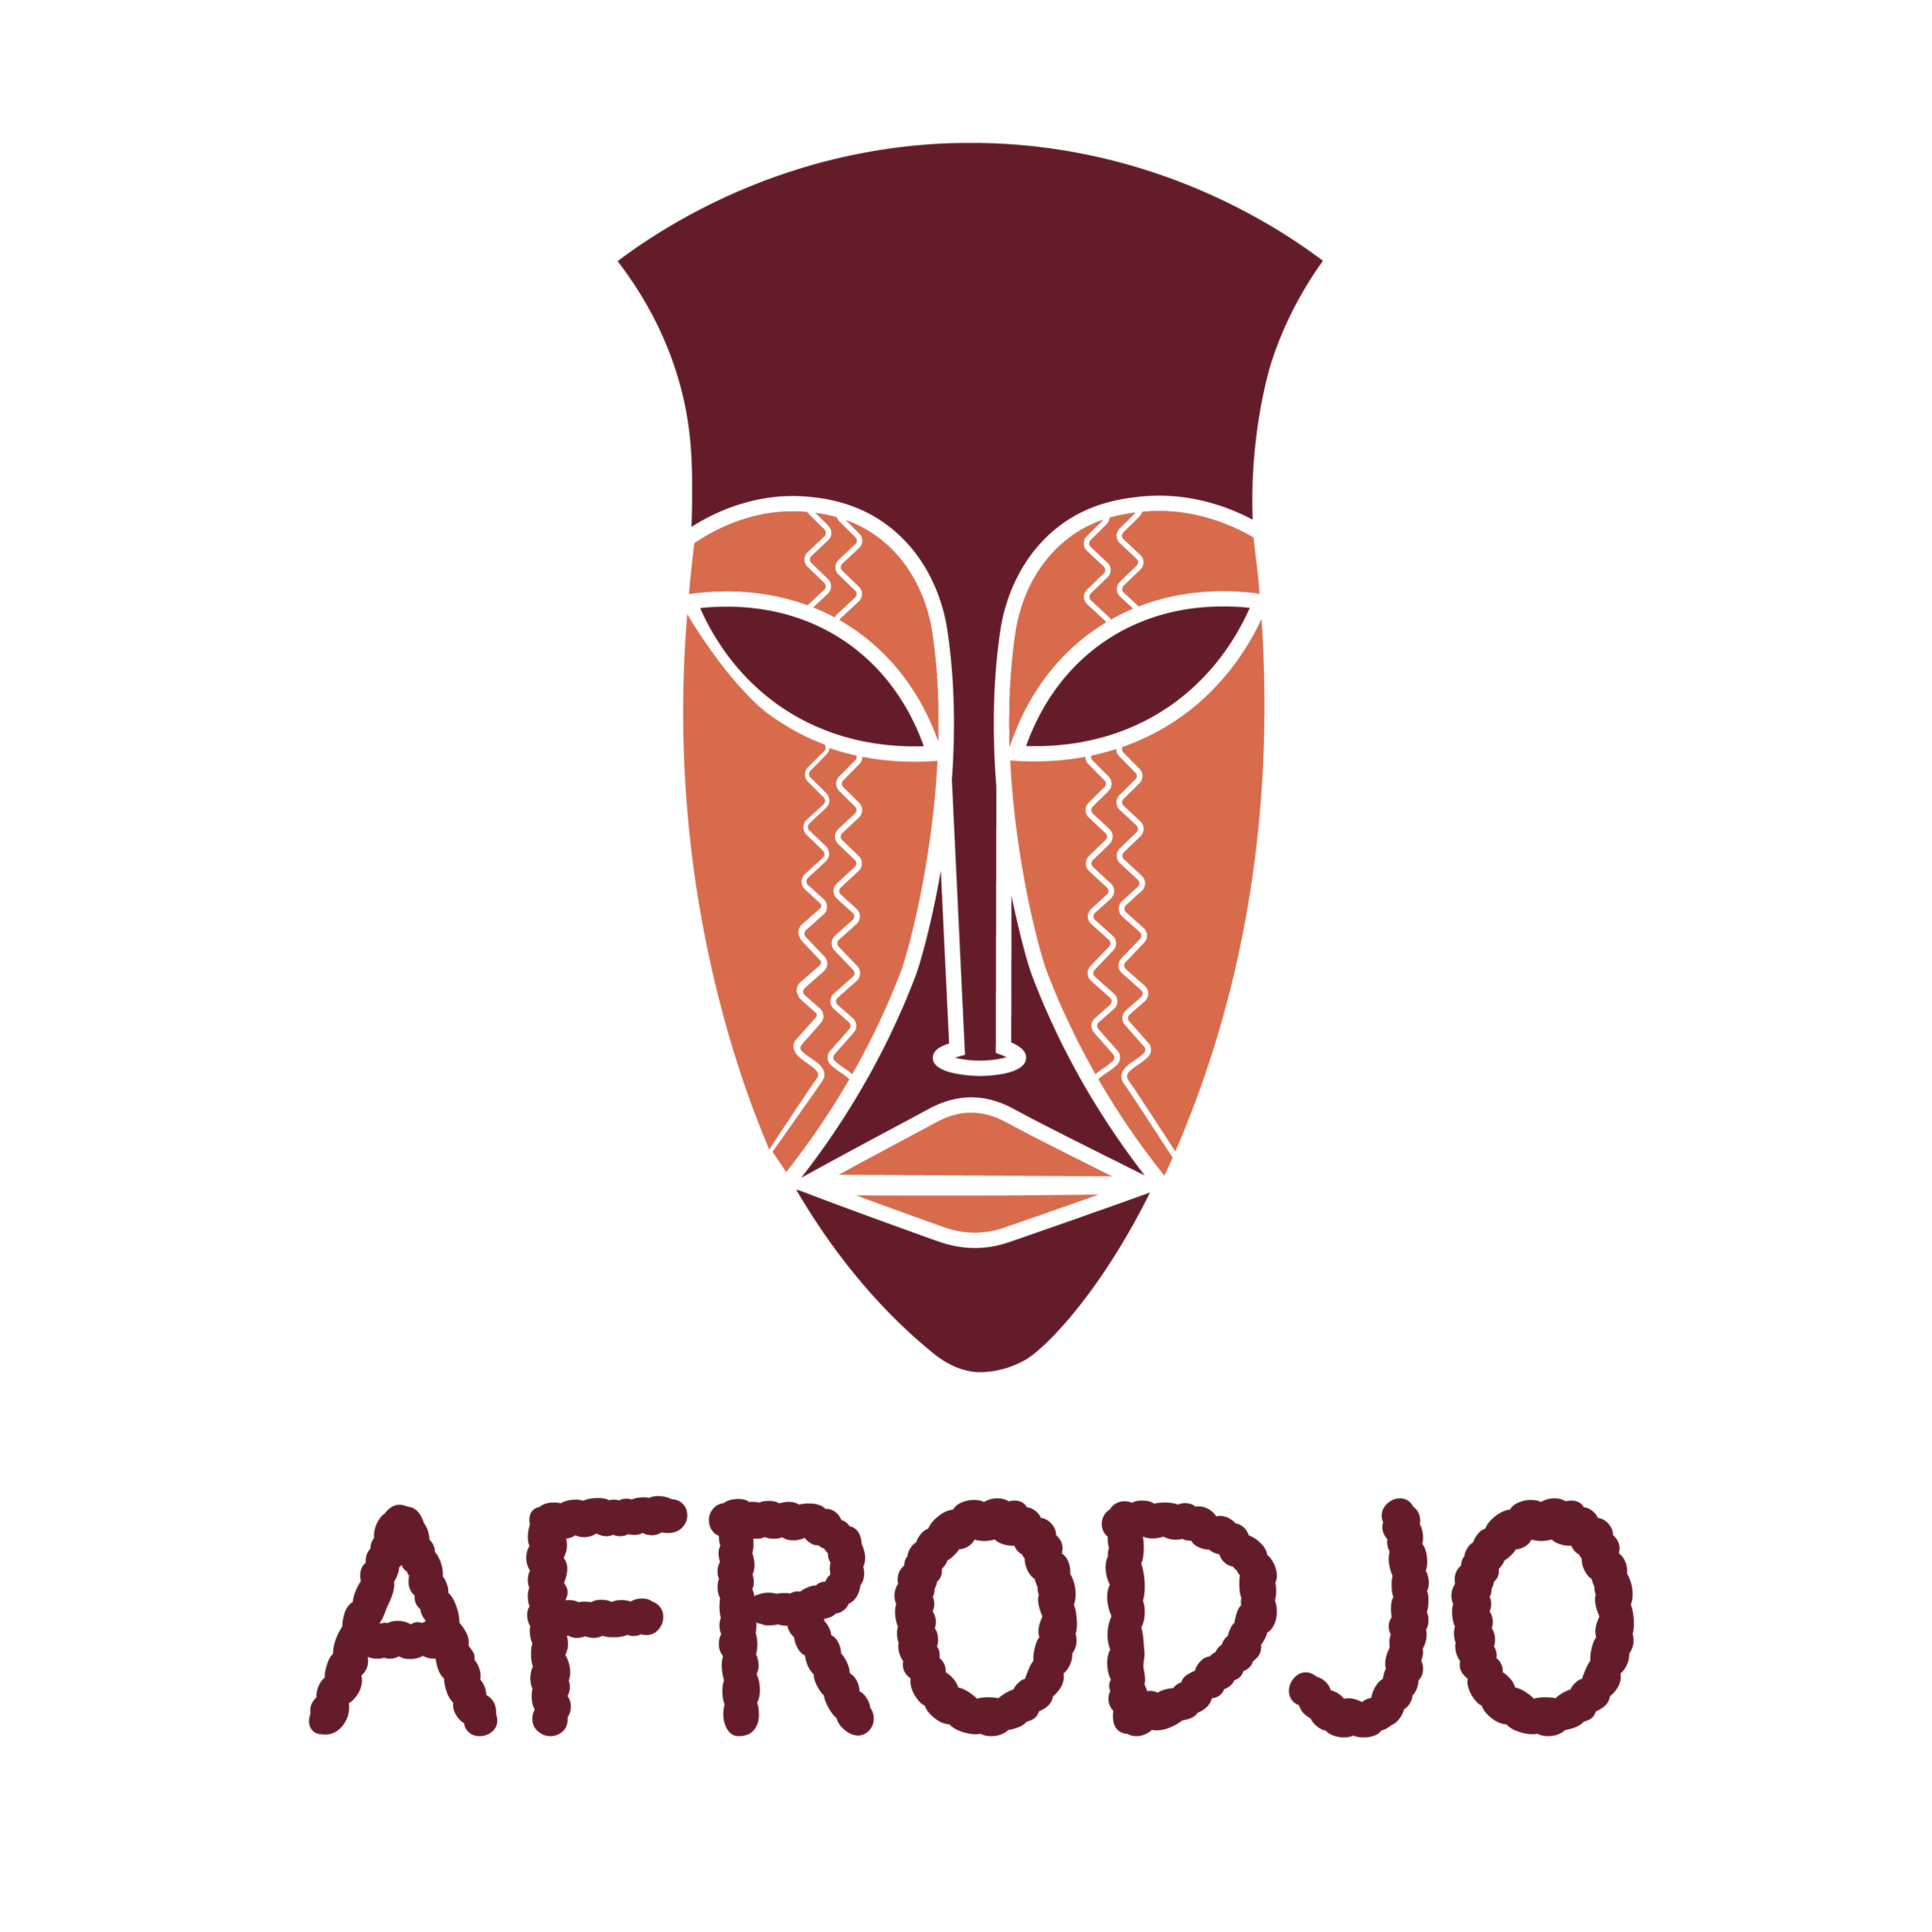 Afrodjo – Vos Tableaux d'Art Africain en 1 clic !